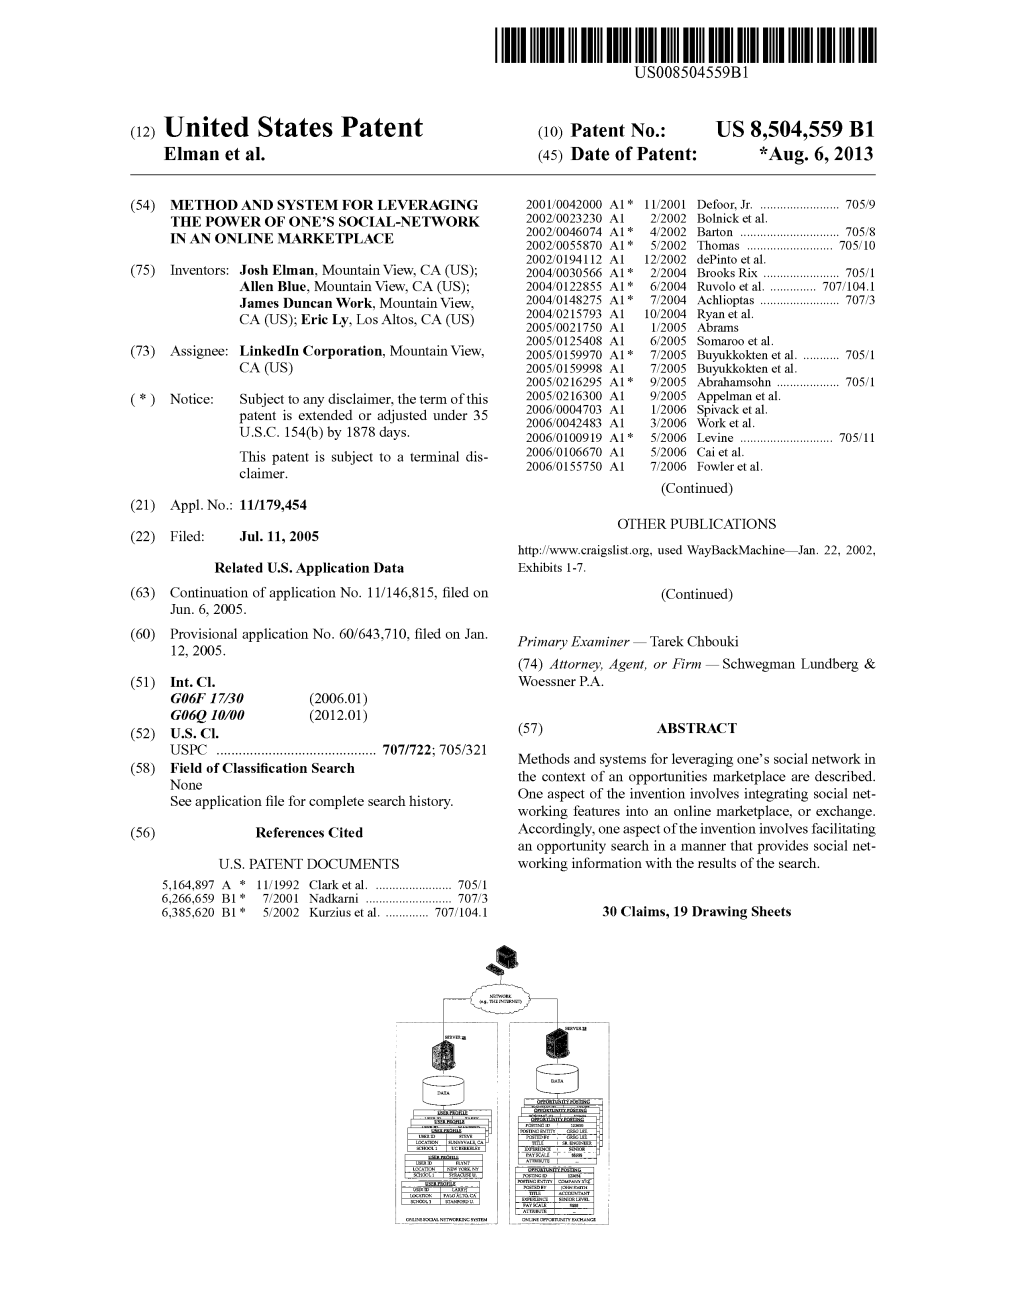 (12) United States Patent (10) Patent No.: US 8,504,559 B1 Elman Et Al